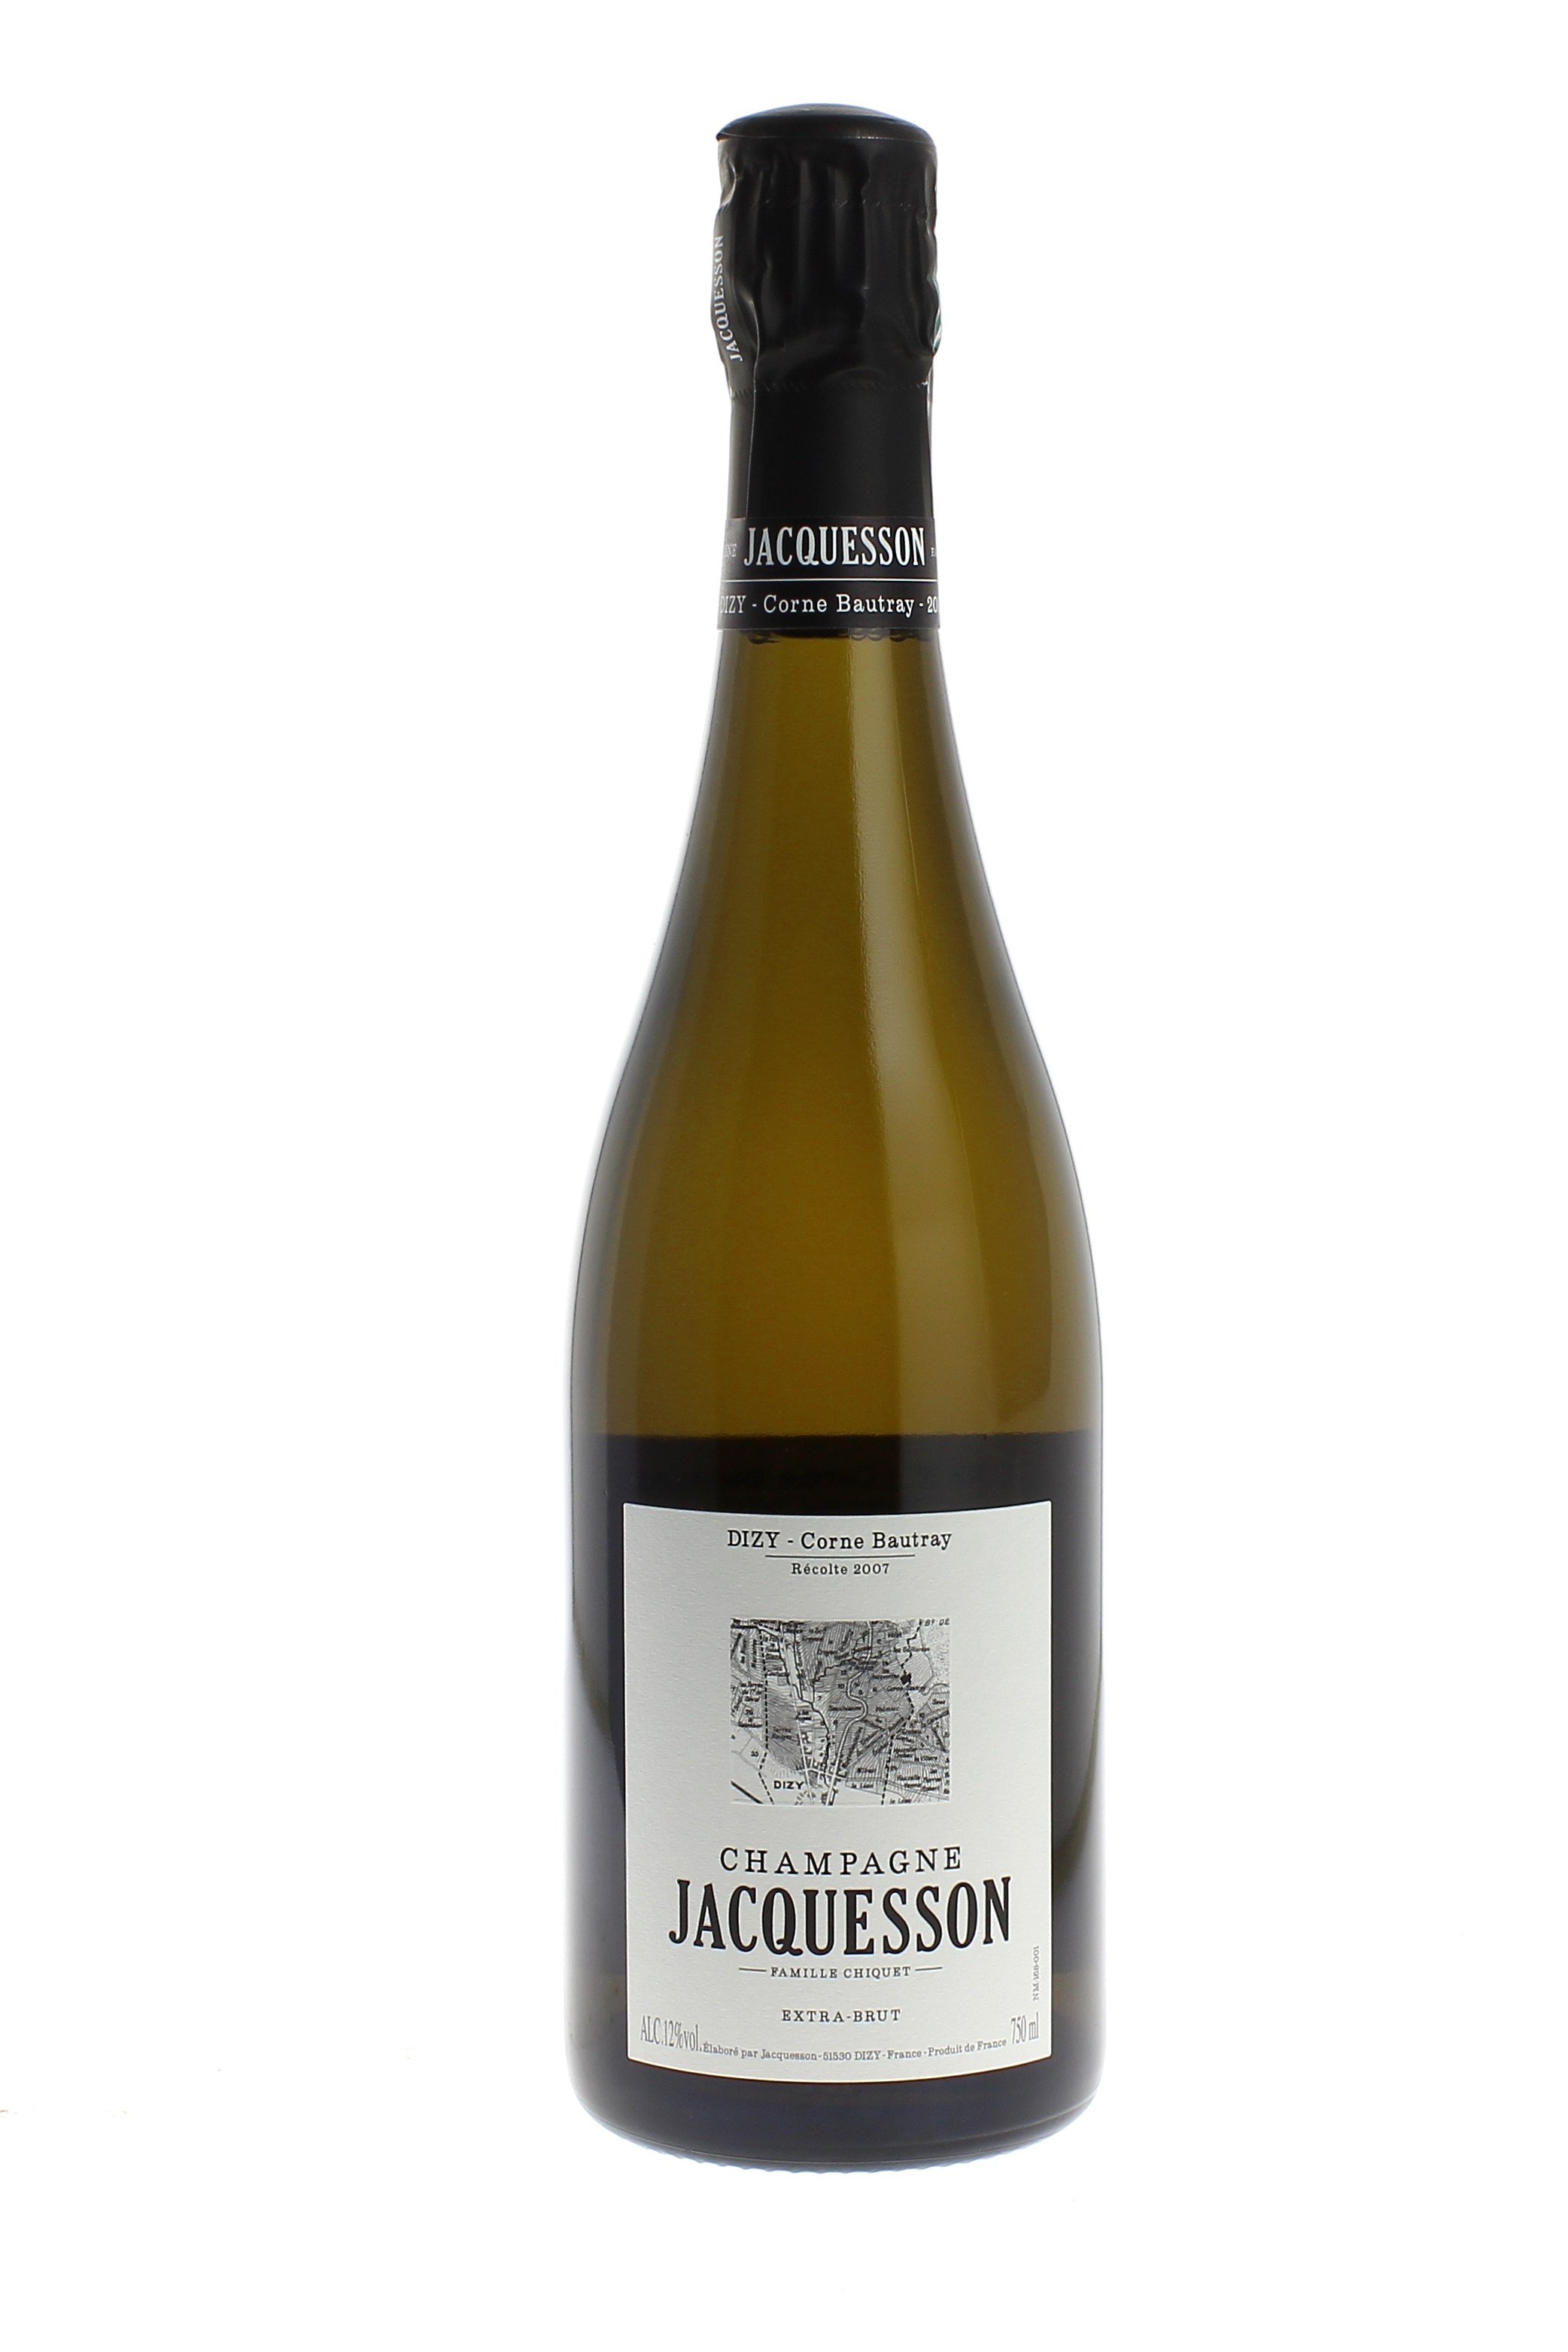 Jacquesson dizy corne bautray 2007  Jacquesson, Champagne